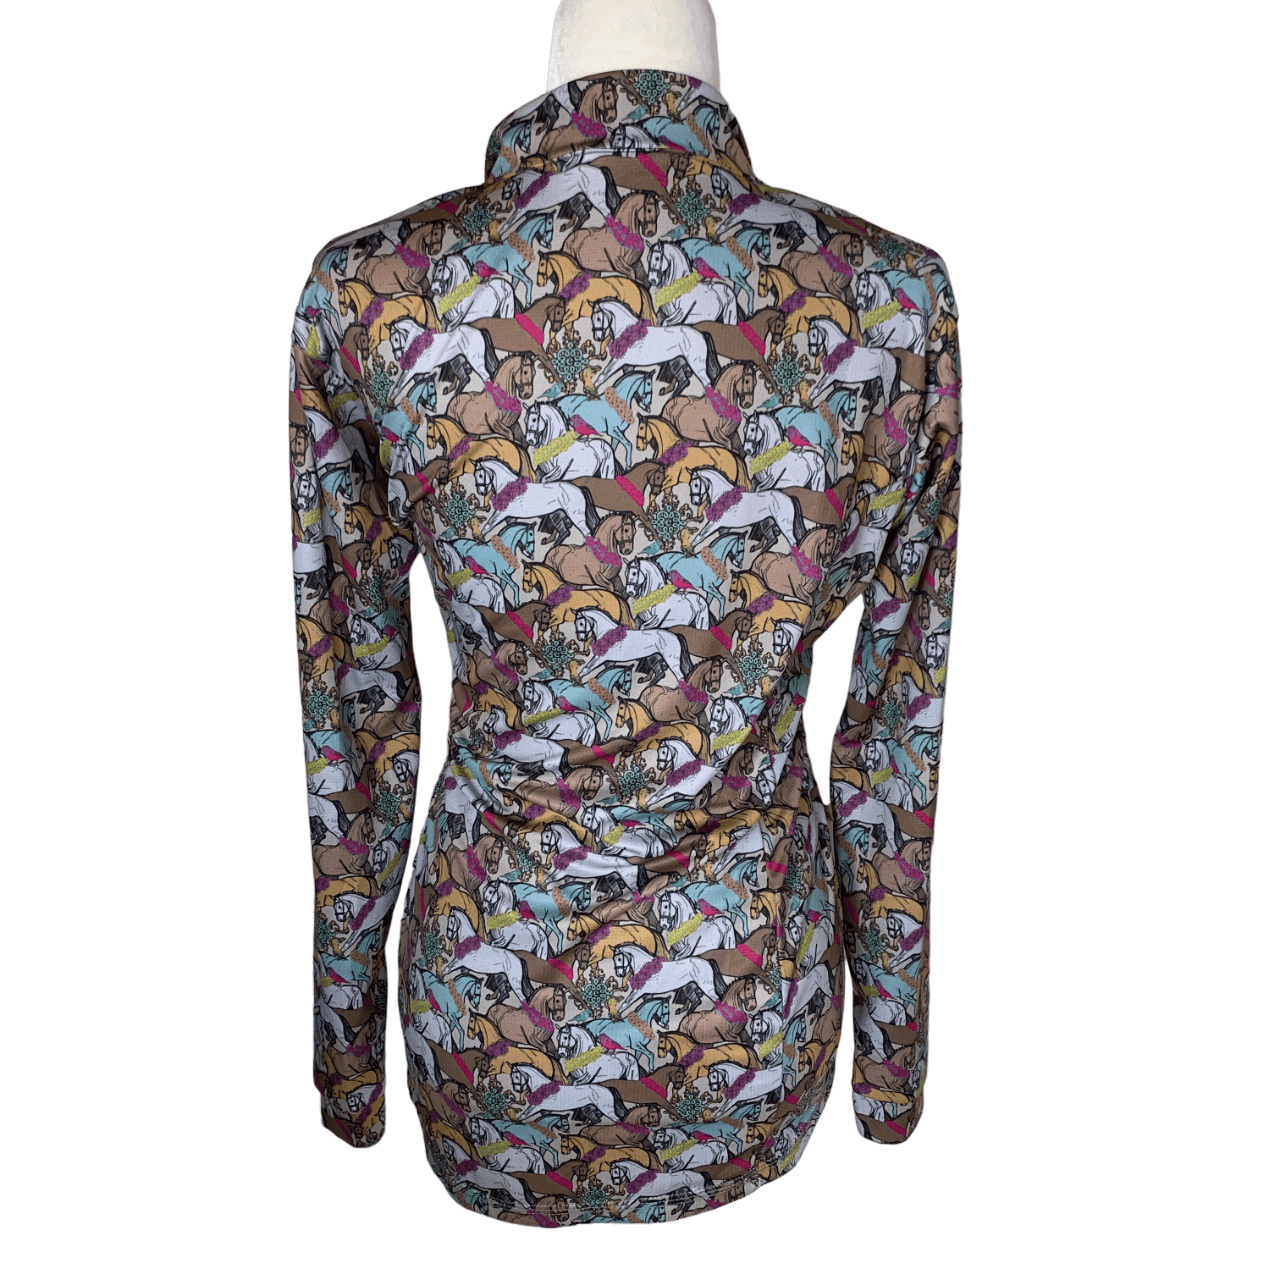 Espoir 'Esprit' Collection Sun Shirt in Horse Print - Woman's XXL